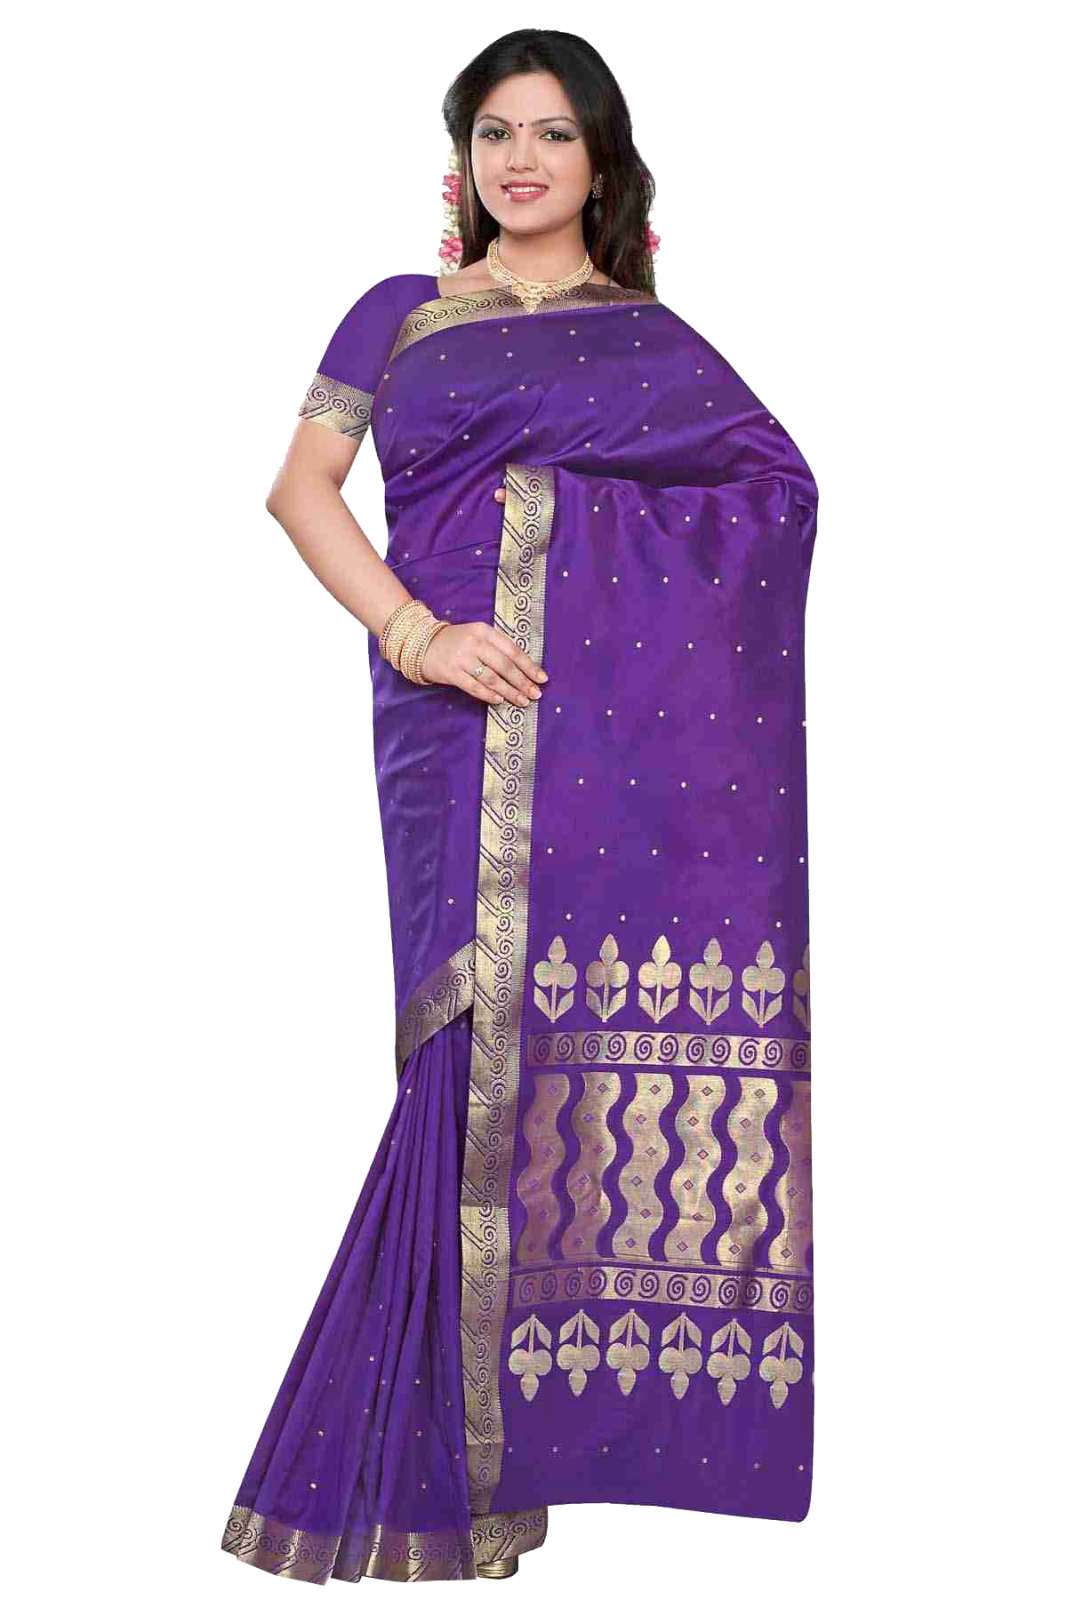 Free Size Vintage Indian Sari Mona Maxi Dress Purple Green & Gold